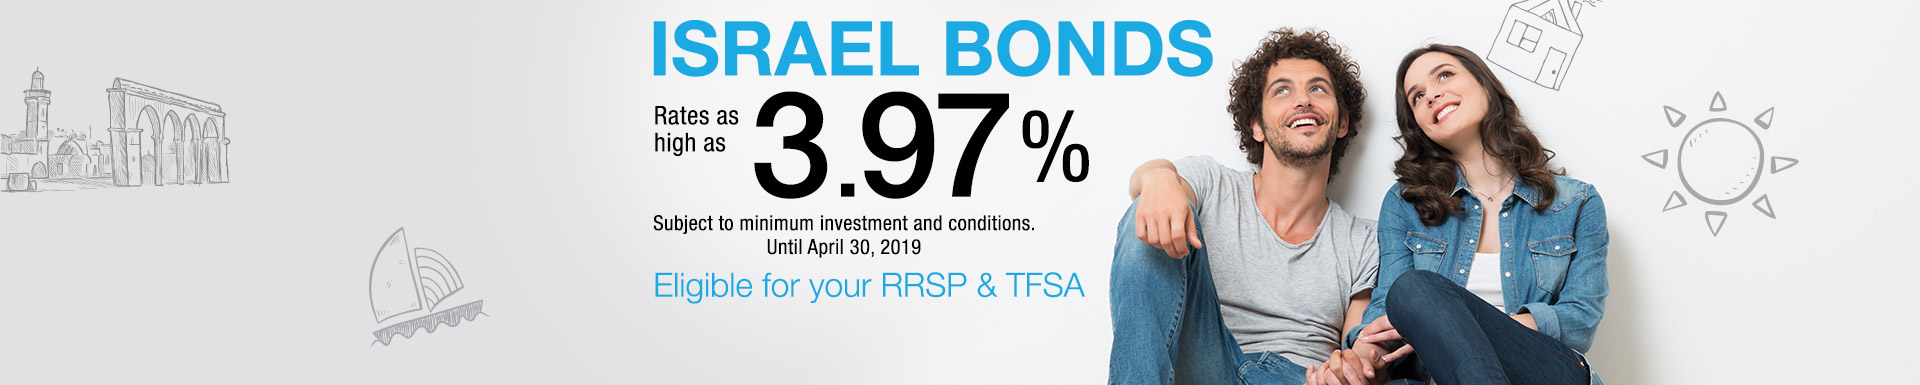 Israel Bonds Top Rate 4.63% until November 30 2018